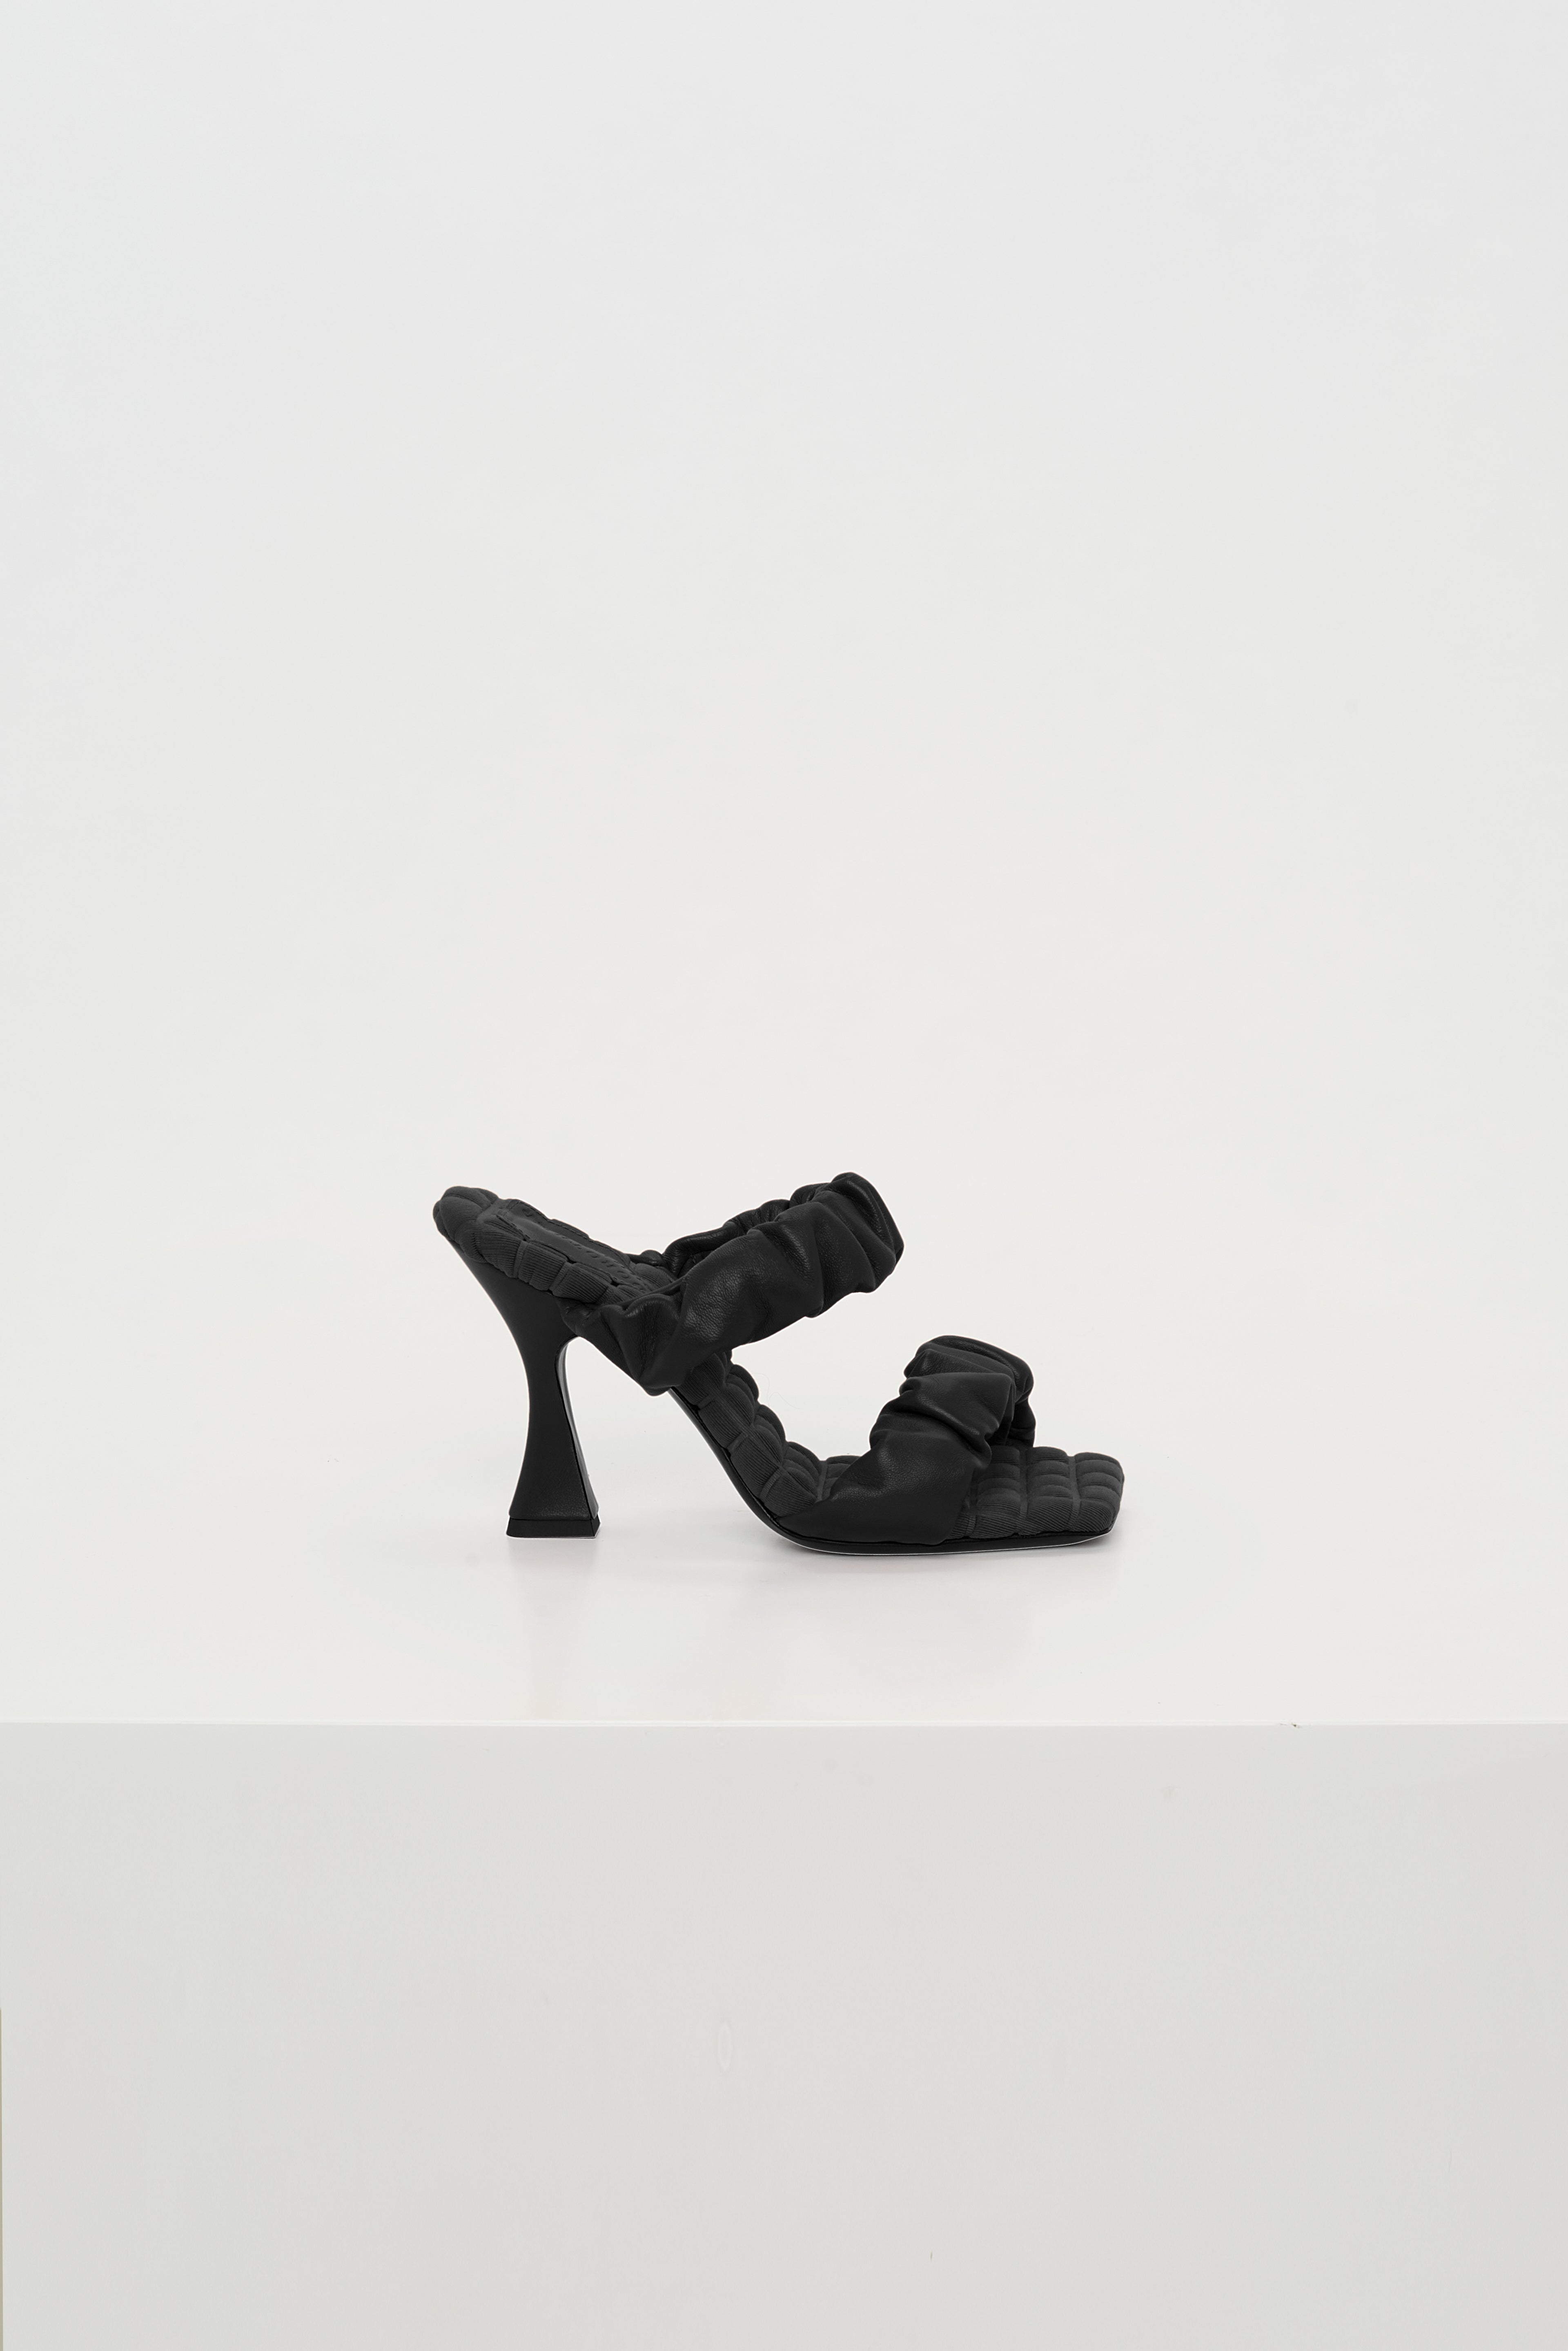 Dorothee-Schumacher-OUTLET-SALE-SPORTY-FEMININITY-sandal-heeled-Sandalen-ARCHIVE-COLLECTION-3_d28f8a03-615b-4e24-adbc-e713a245417f.jpg